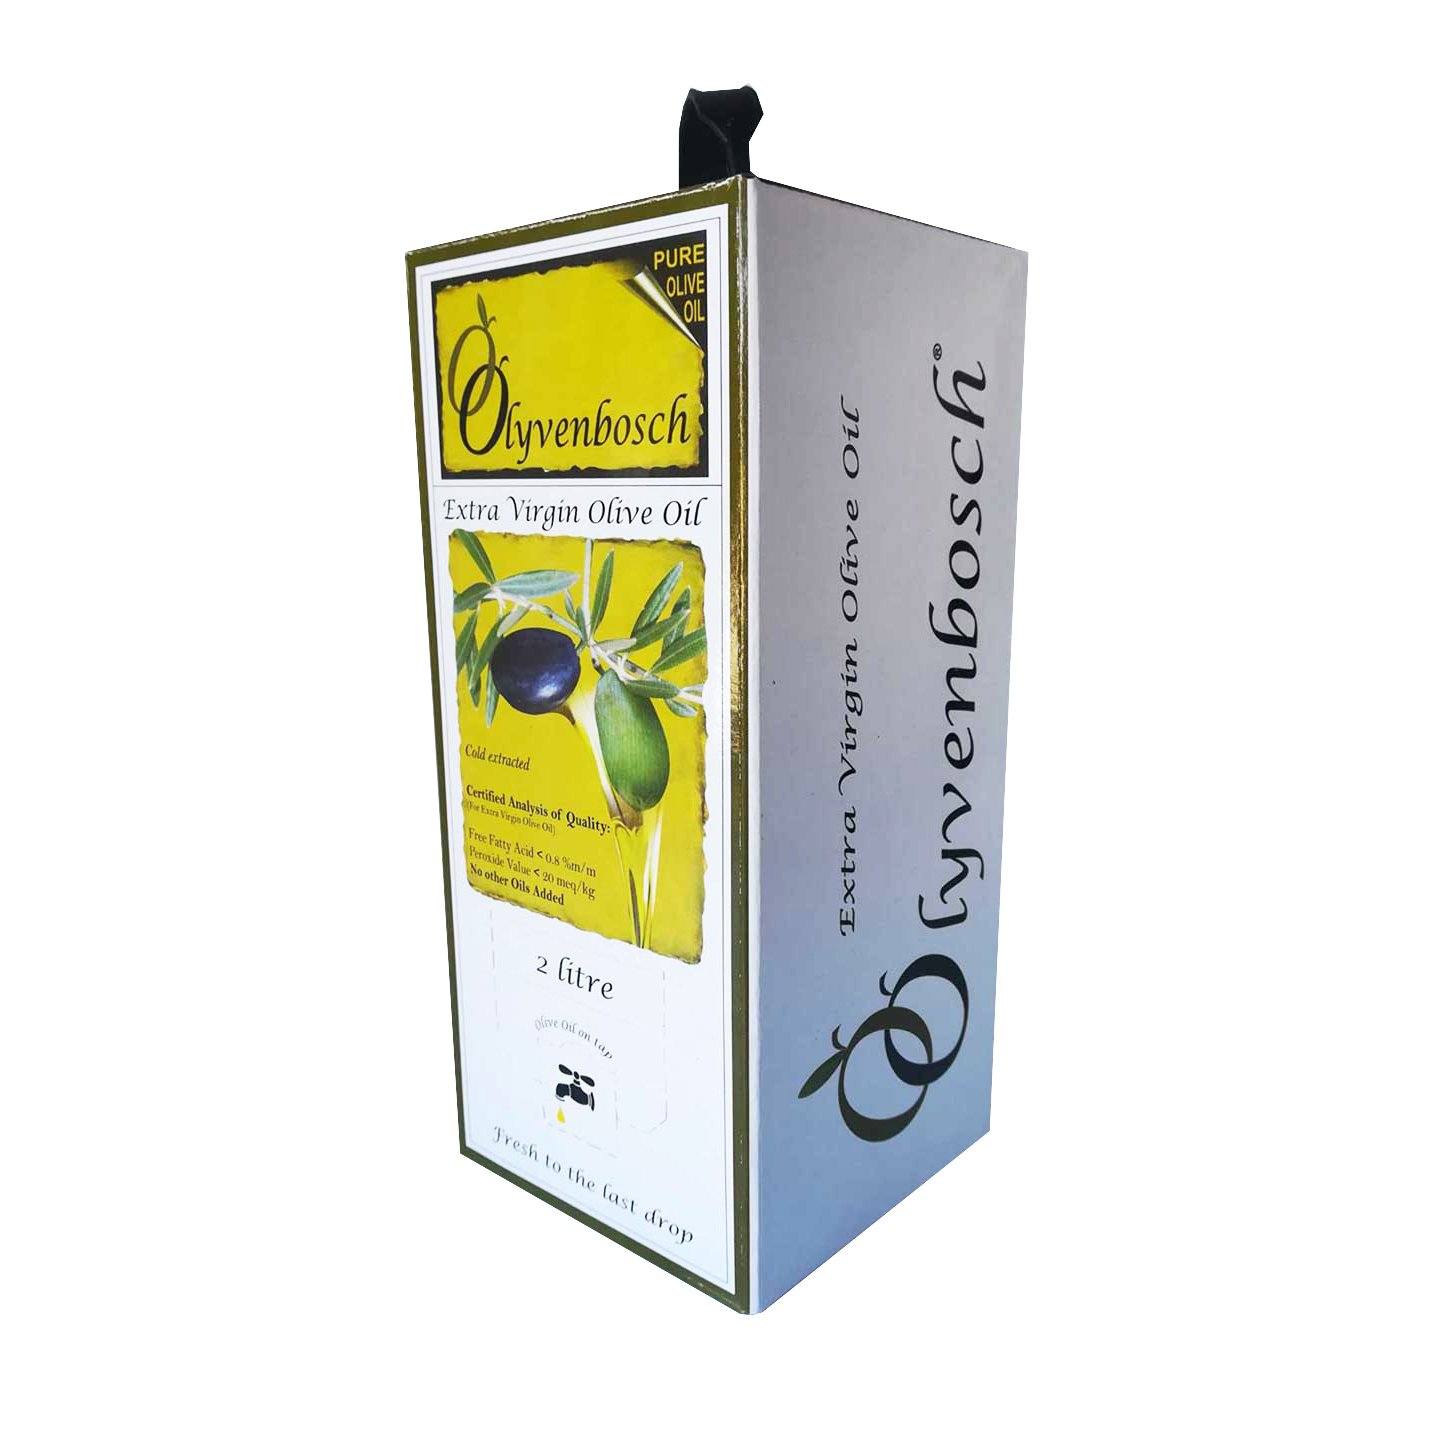 Olyvenbosch Extra Virgin Olive Oil 2L 'On Tap' Box food Olyvenbosch Olive Farm